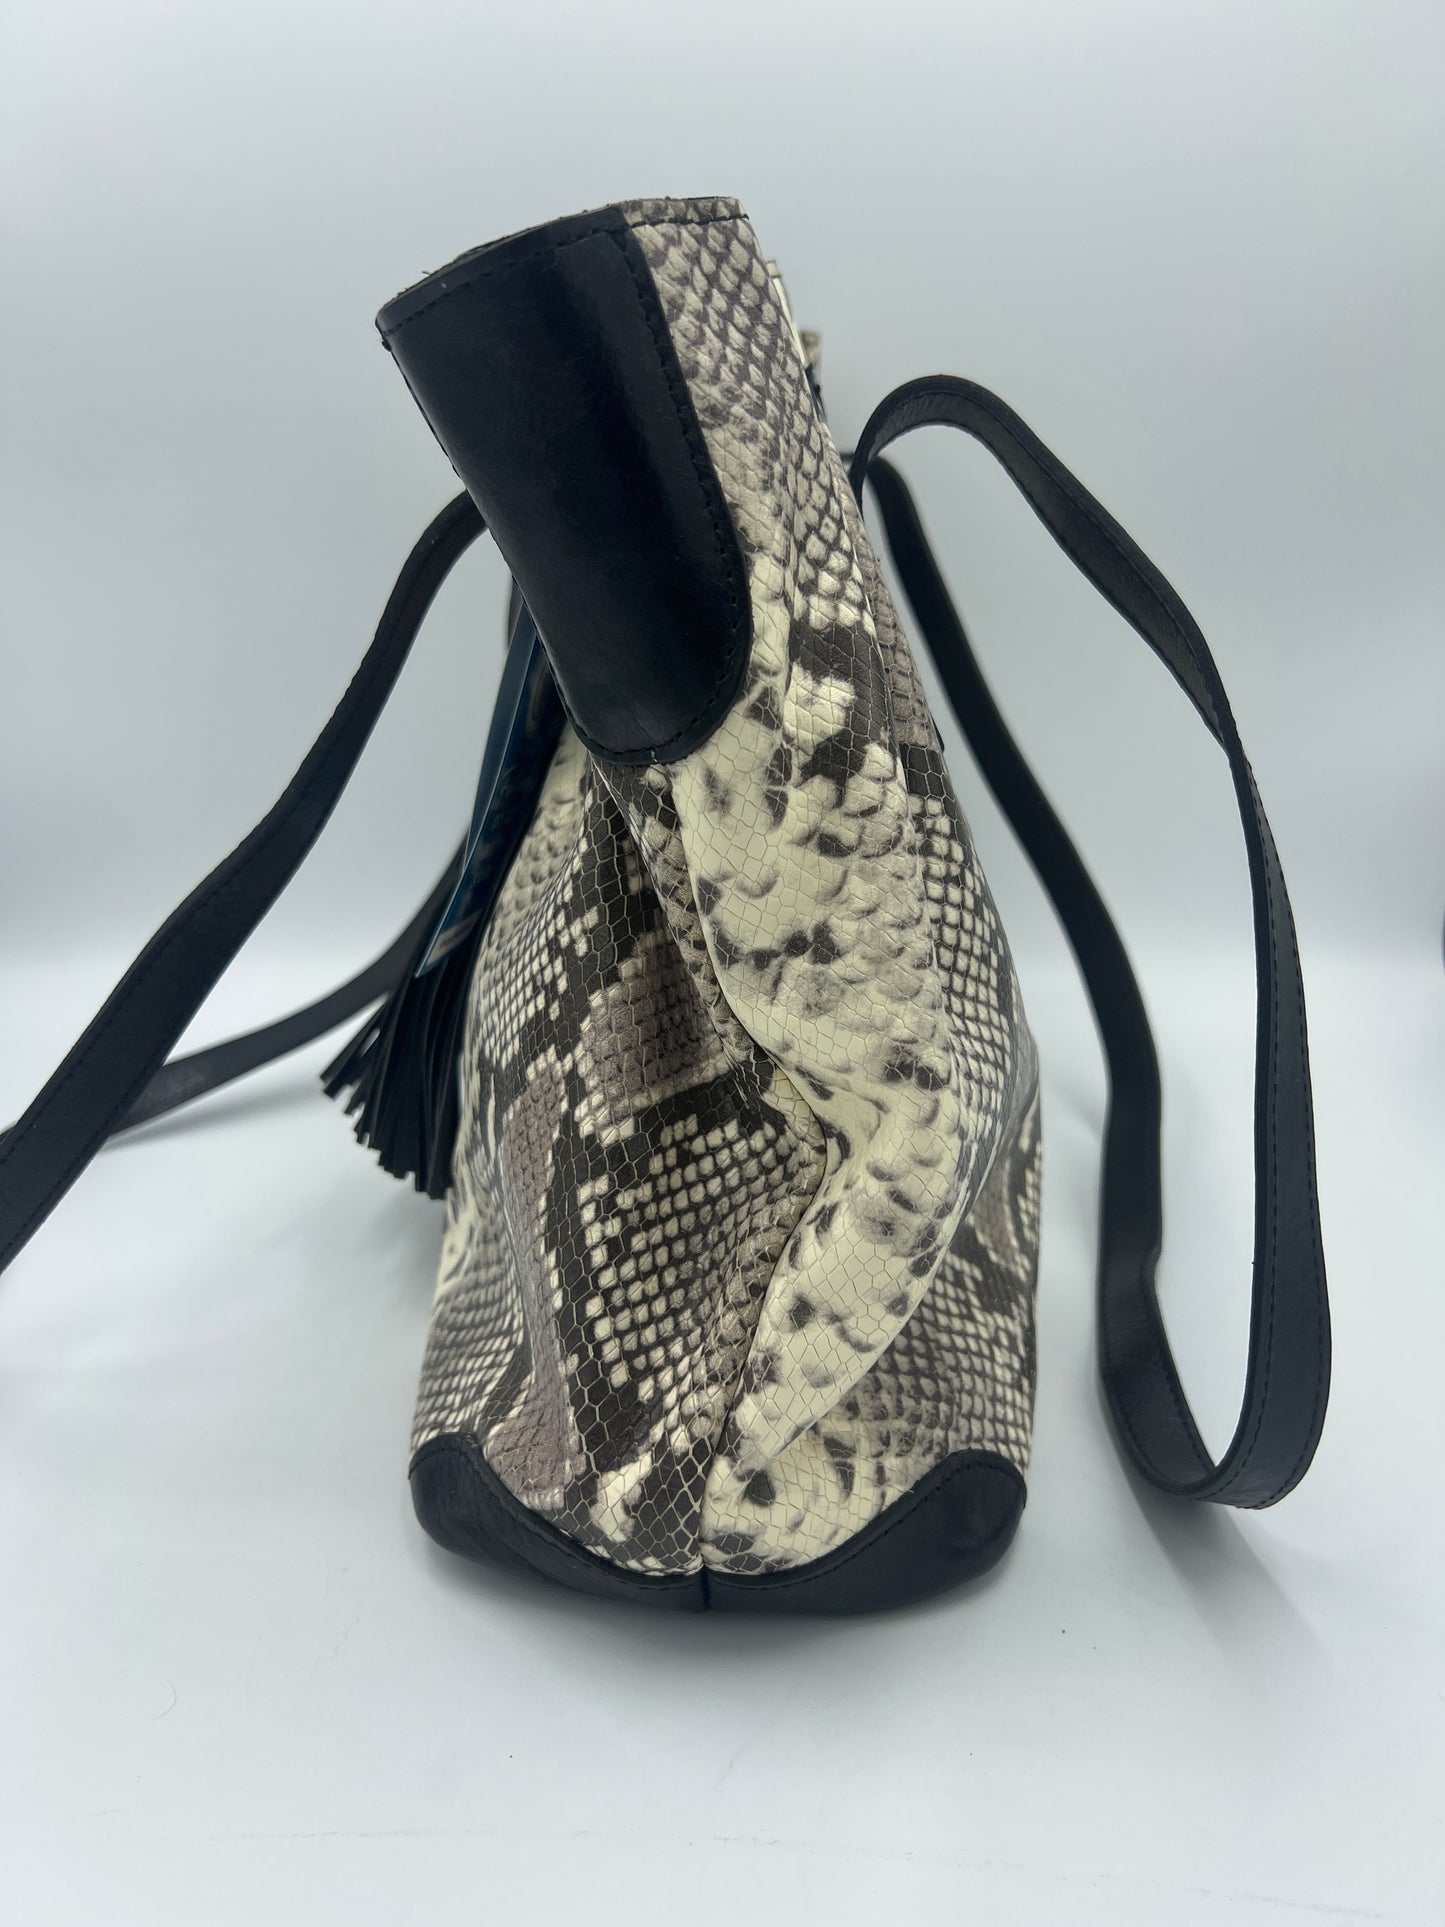 Like New! Tote / Handbag Designer By Patricia Nash